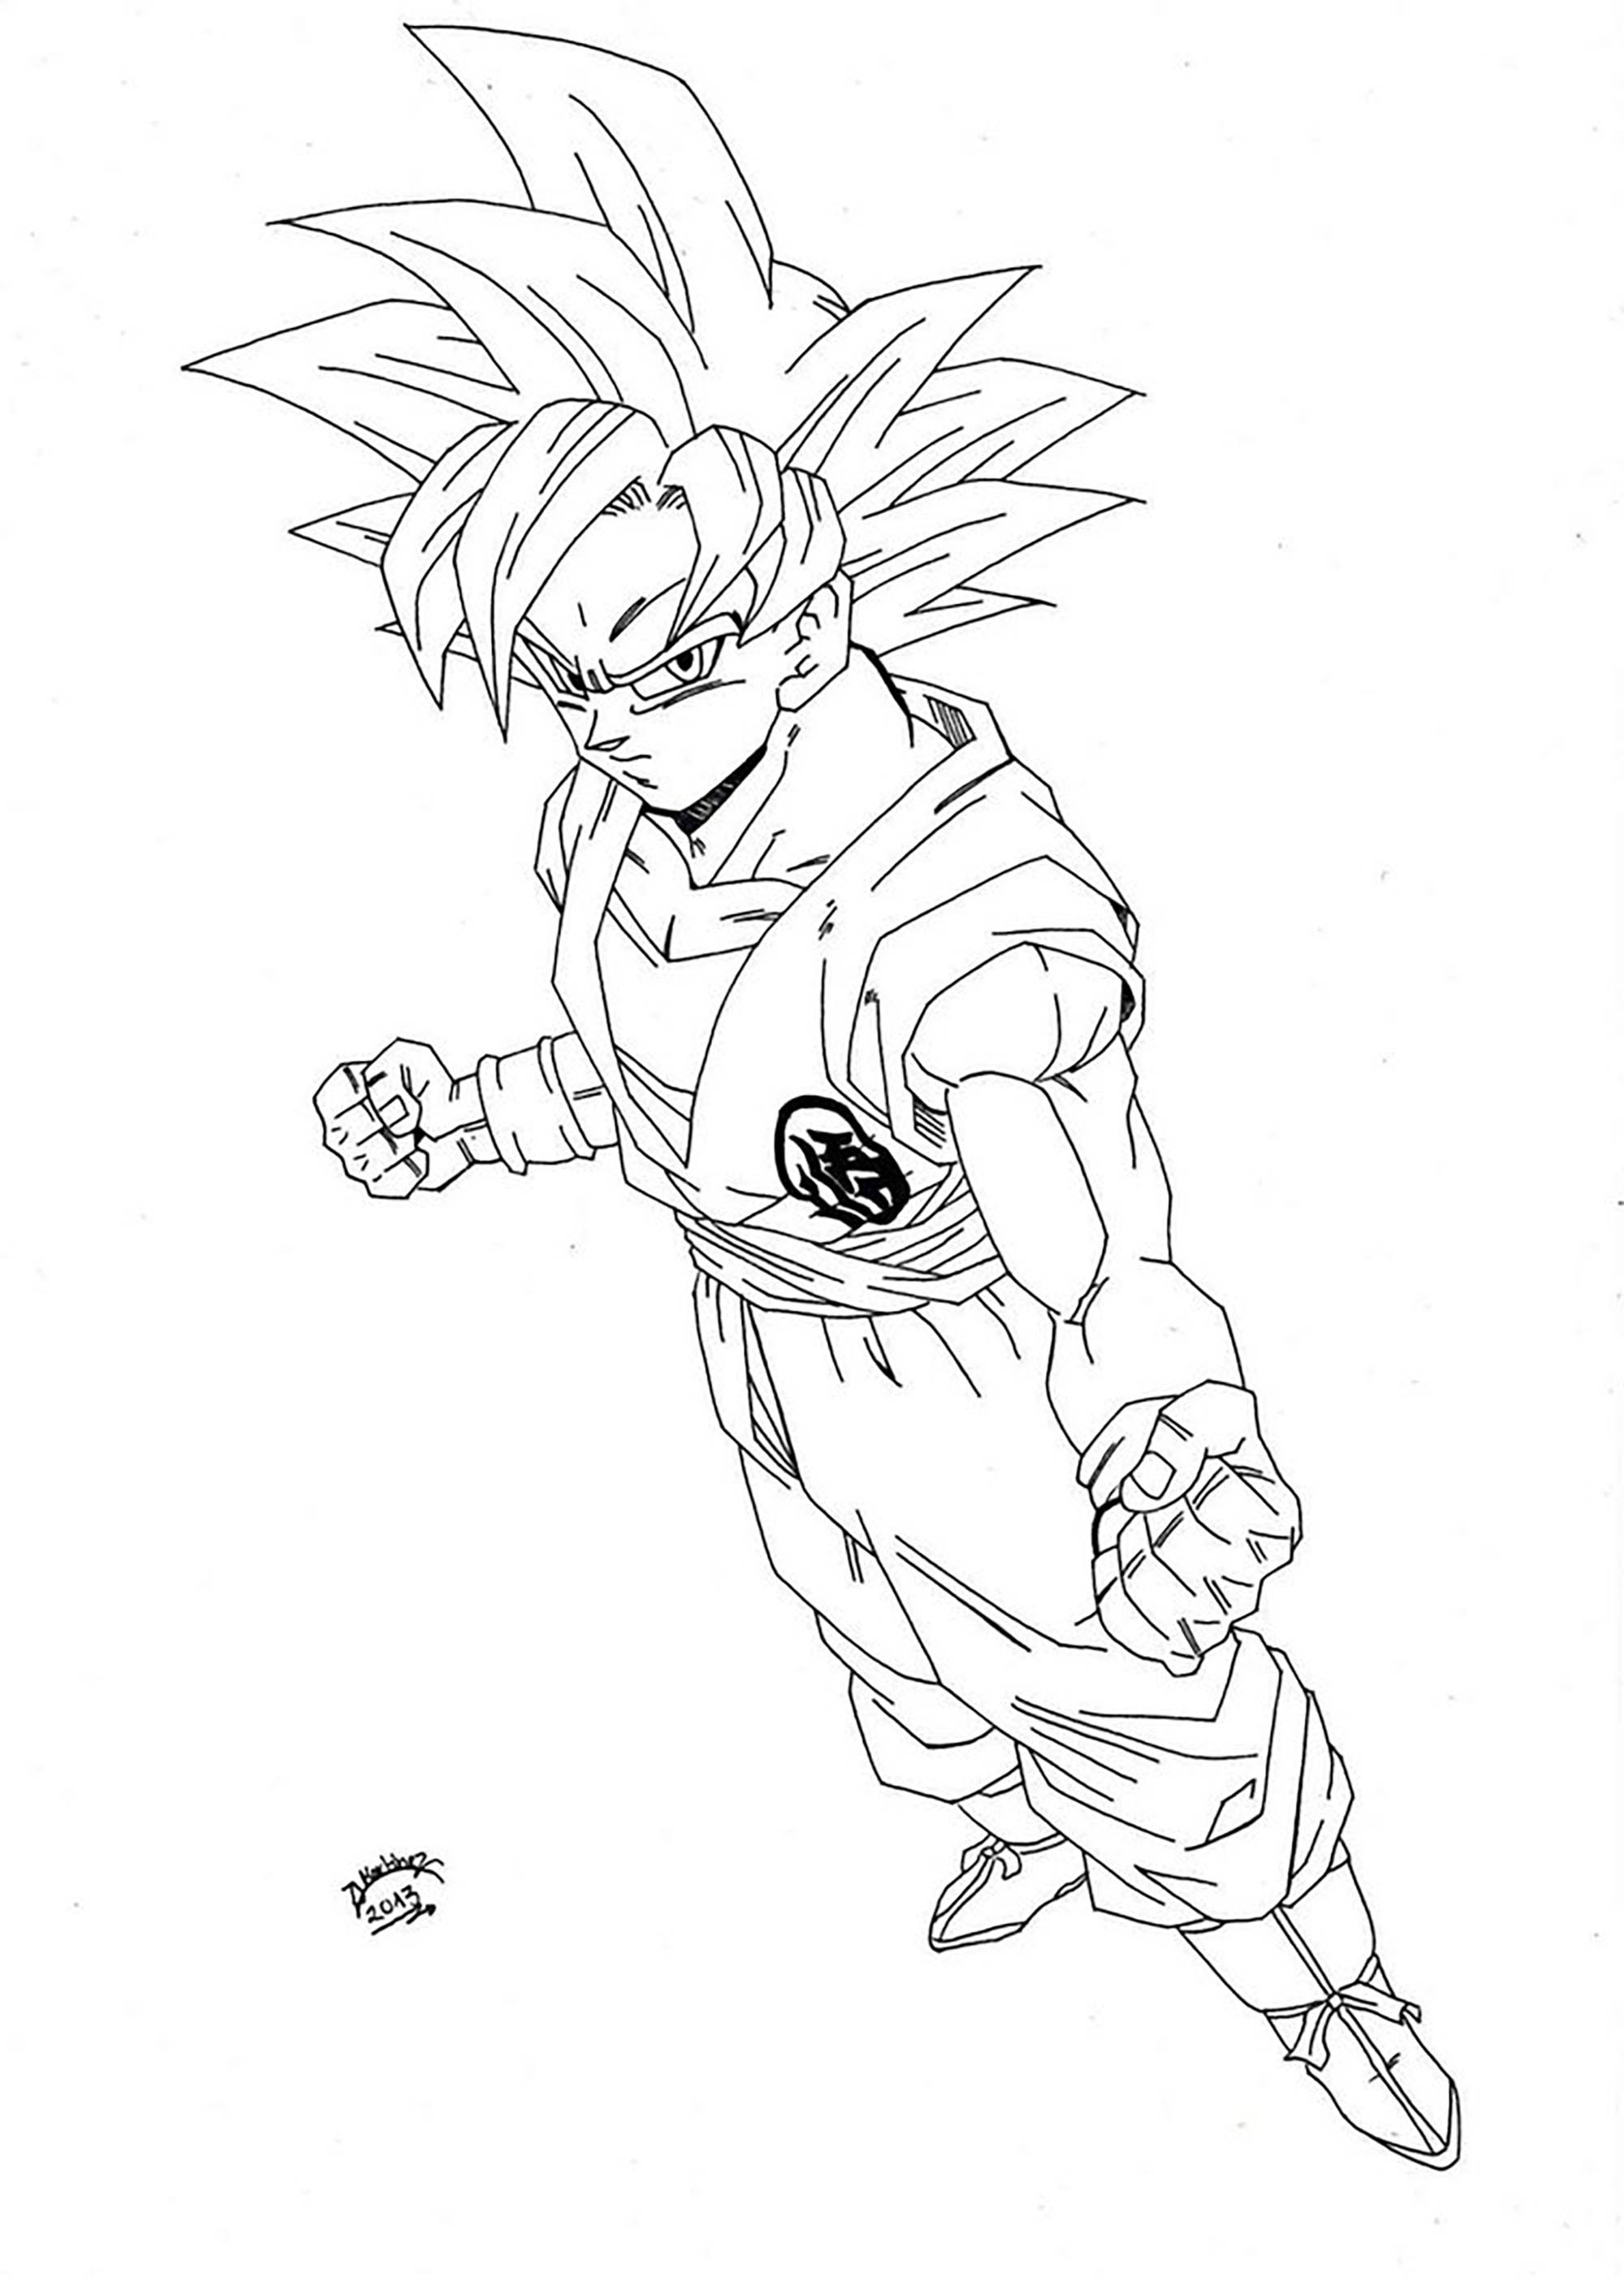 Dragon ball gratuit - 8 - Image avec : Goku